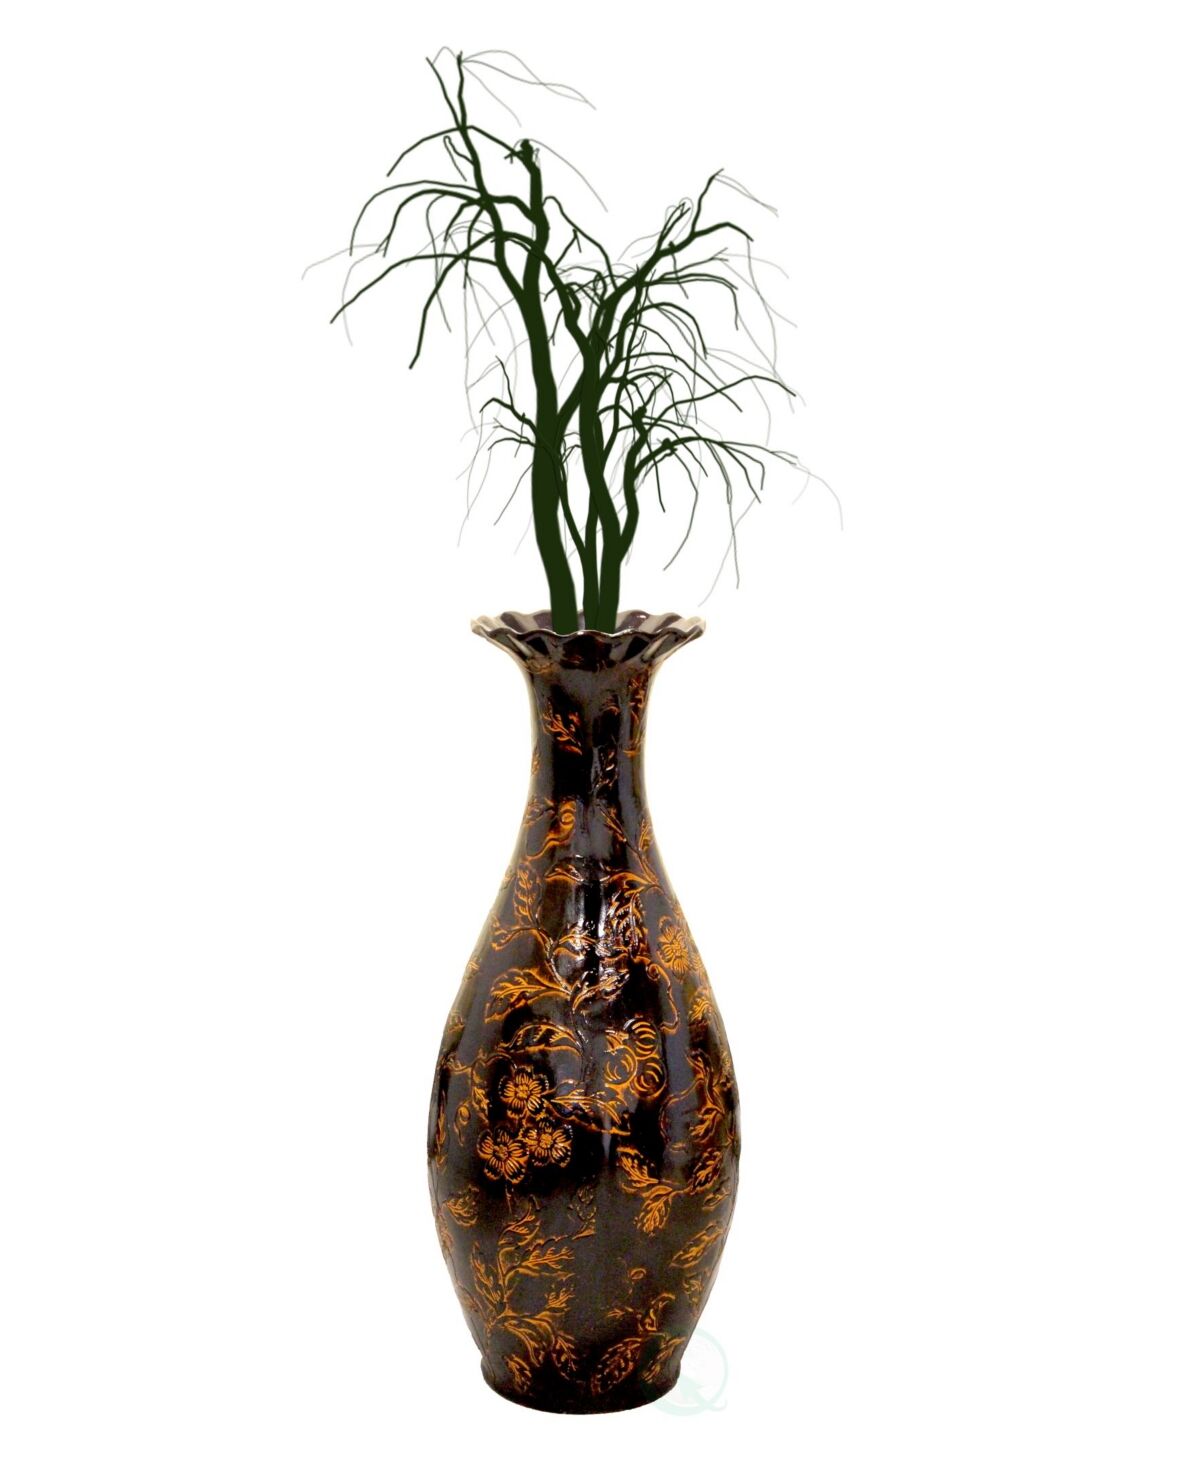 Uniquewise Tall Floor Vase, Traditional Brown home interior Vase, Ceramic Flower Holder Centerpiece for room decor, Livingroom Decor Large Floor Vase,